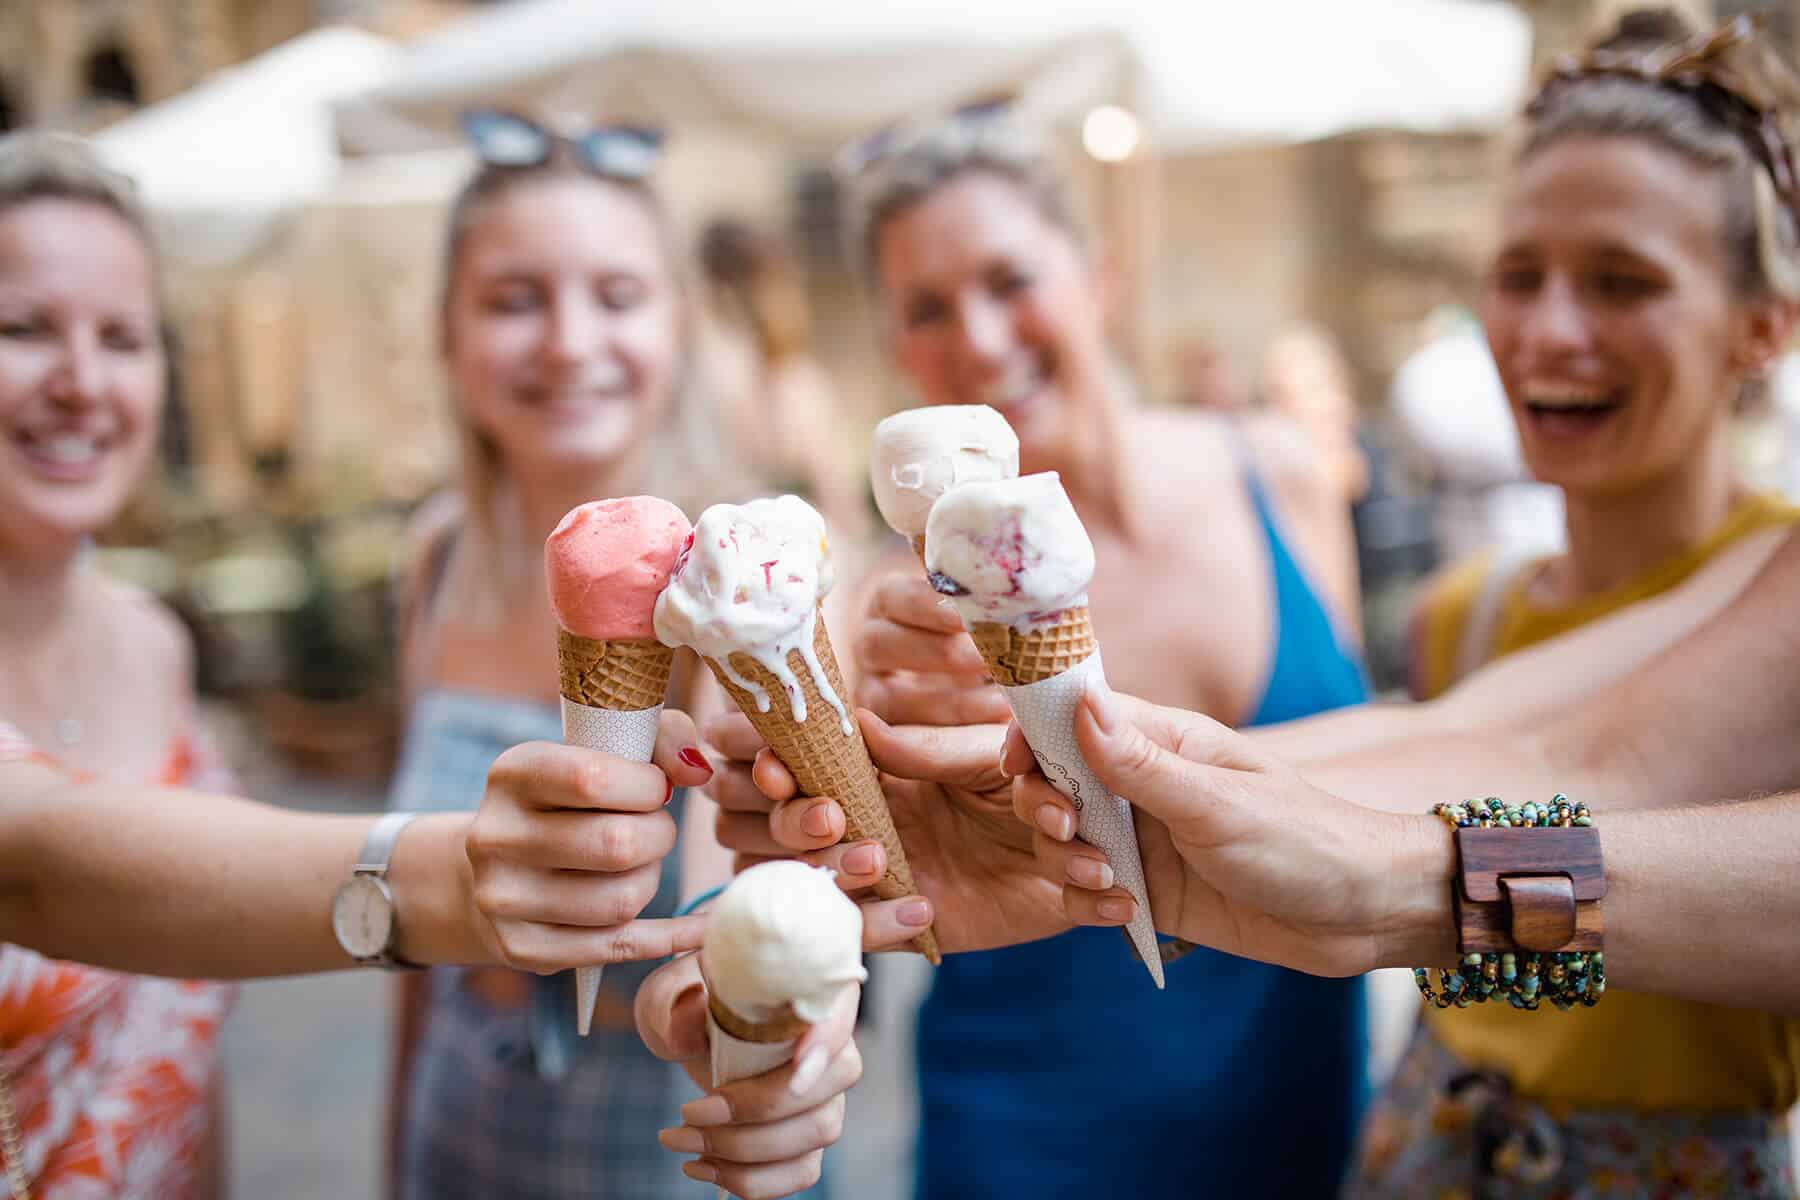 Group of women doing cheers with ice cream cones